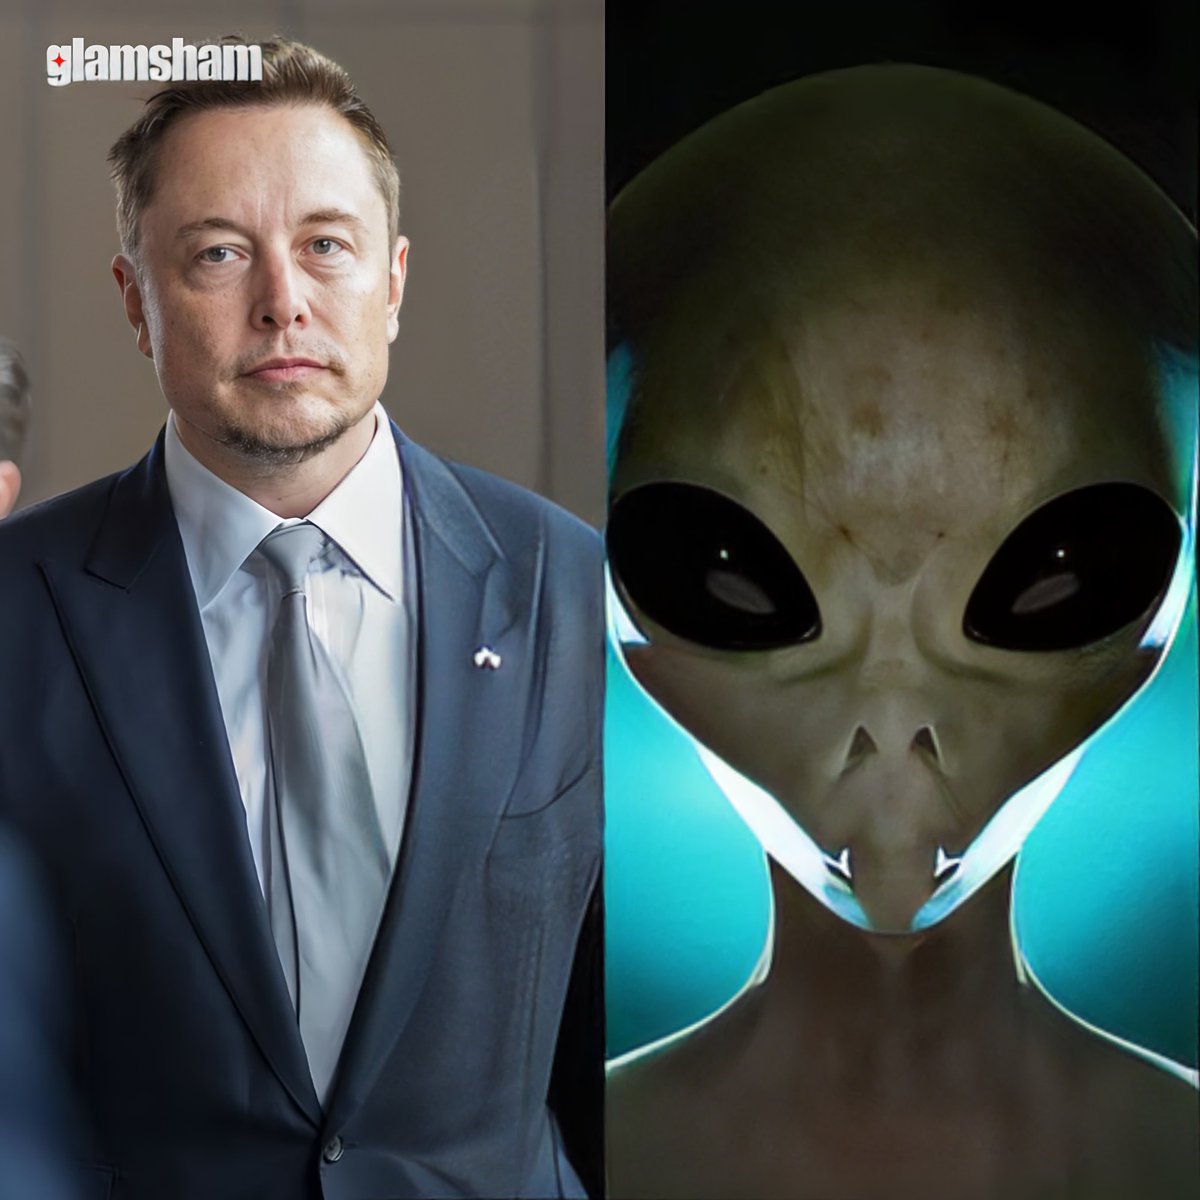 I KEEP SAYING I'M AN ALIEN, BUT NOBODY BELIEVES ME' - ELON MUSK

#Glamsham #ElonMusk #Hollywood #Scientist #Tesla #Internationalnews #Aliens